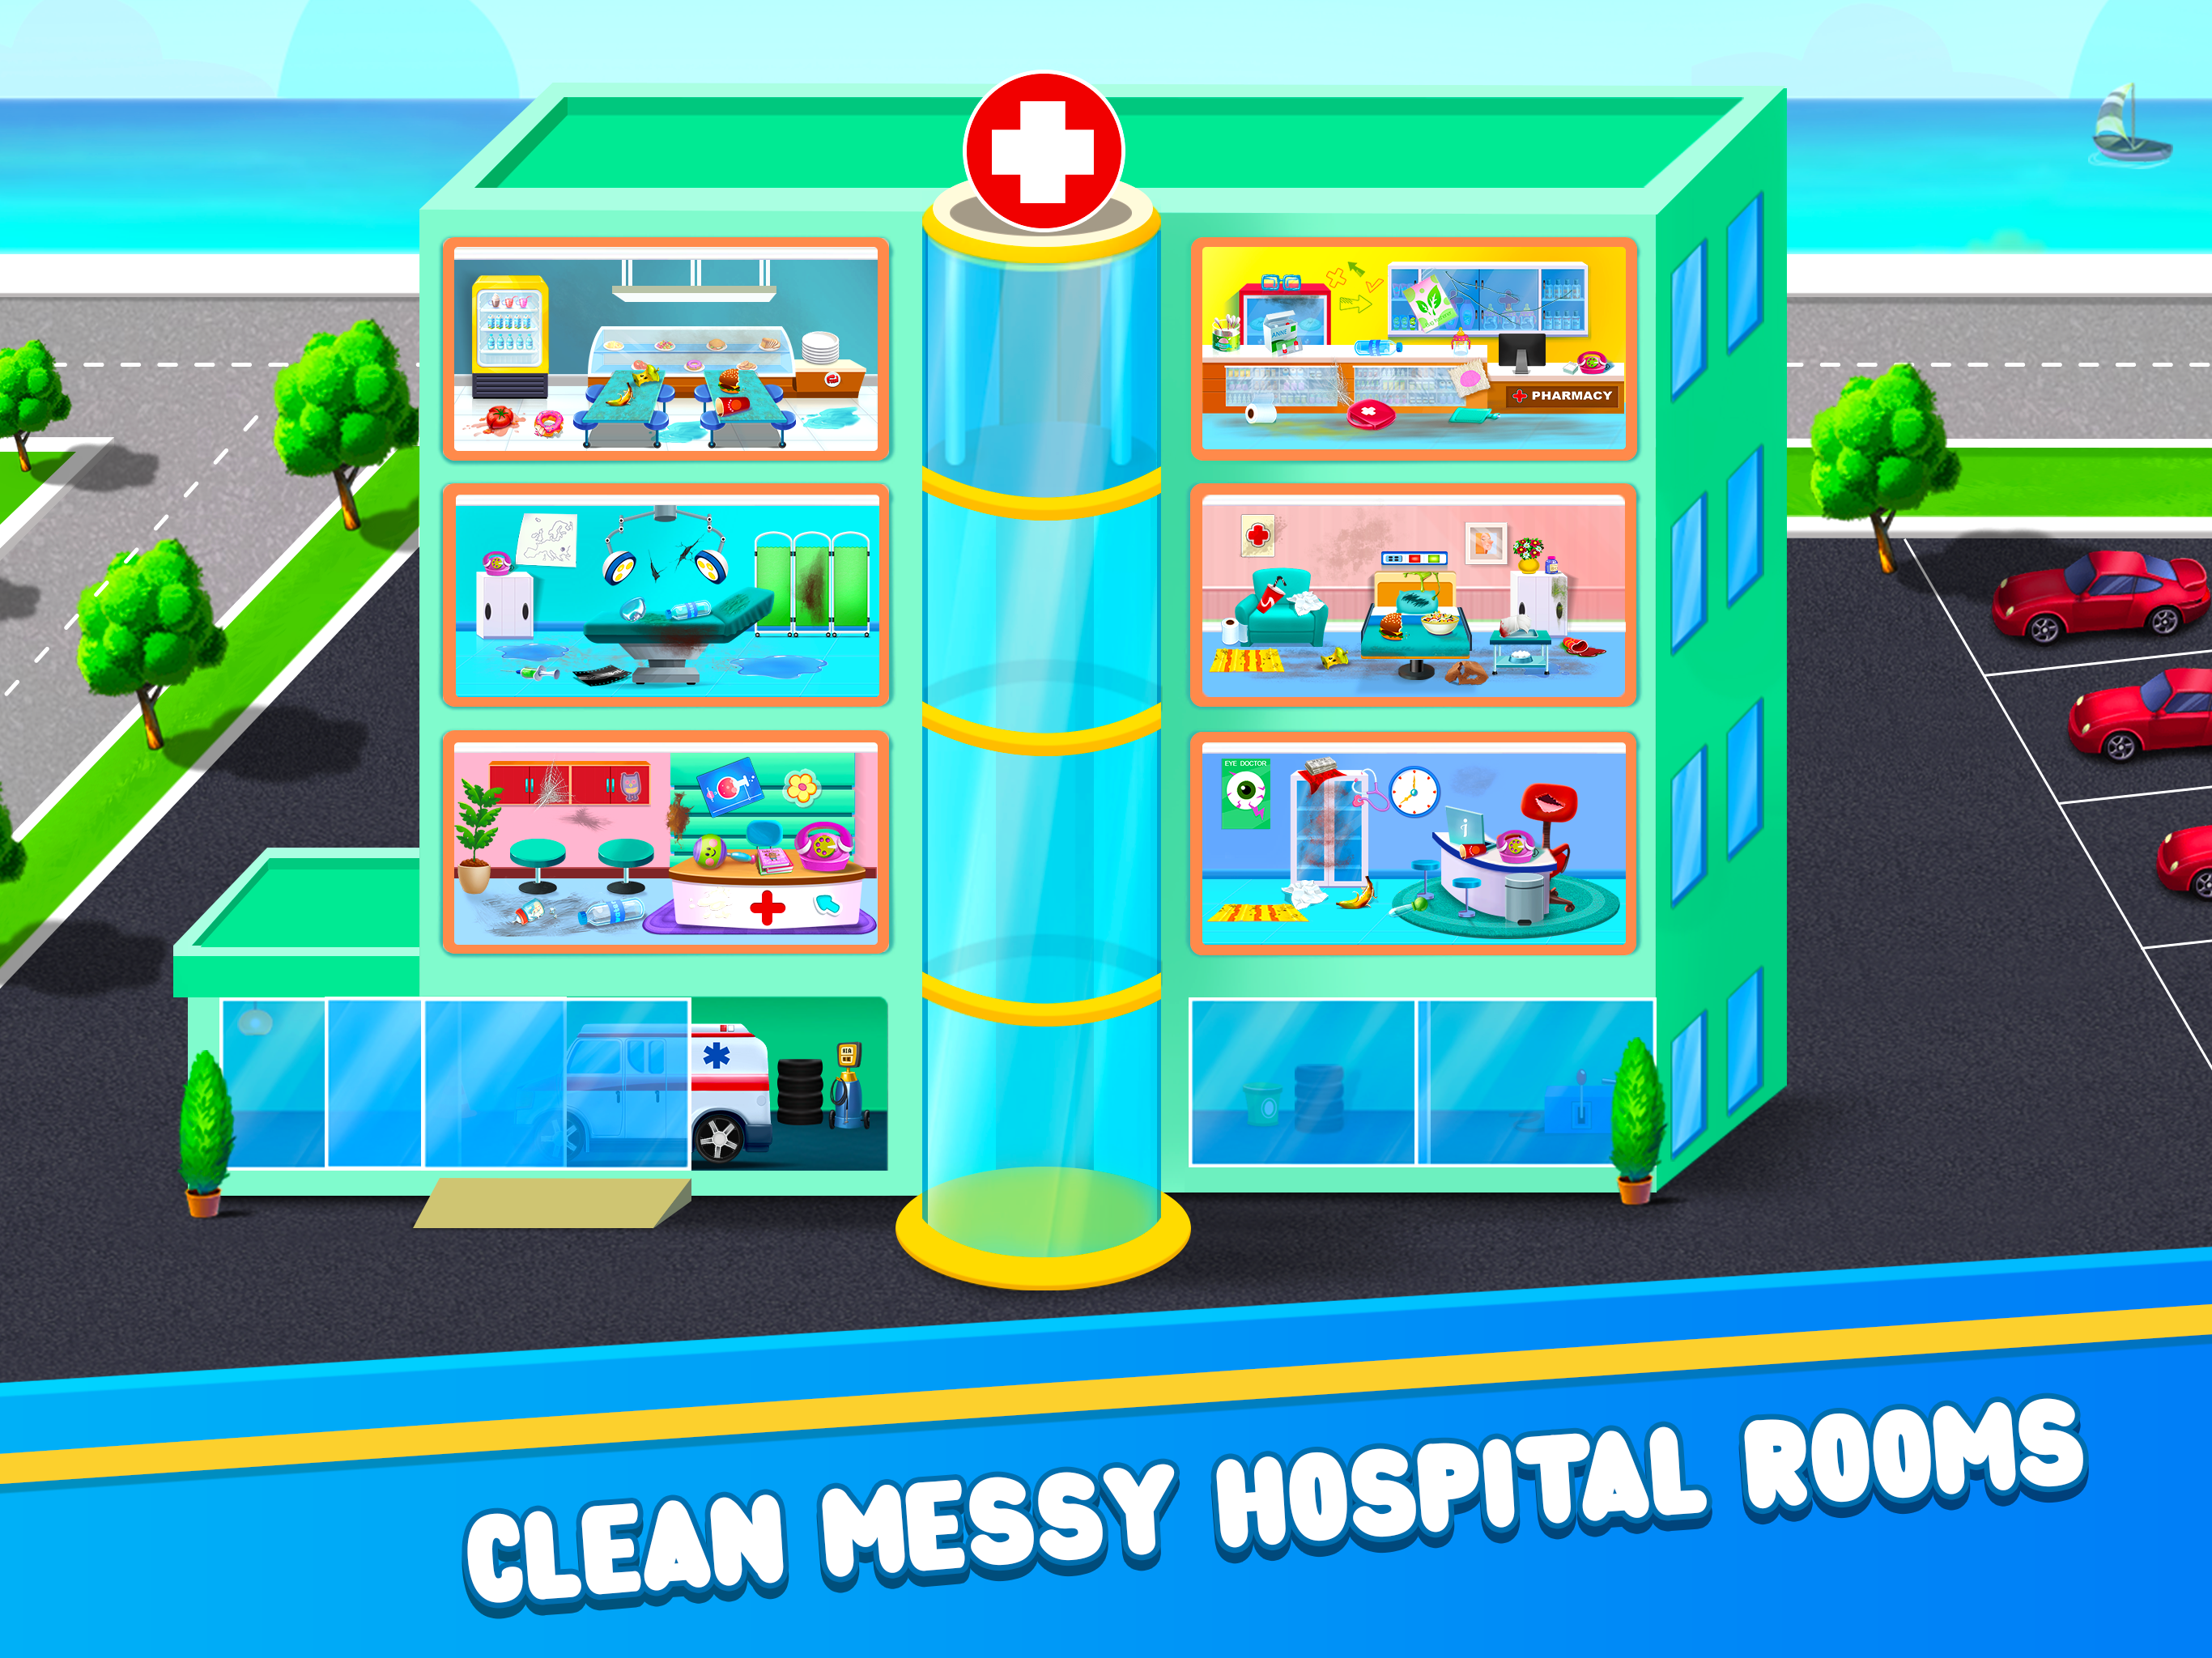 Screenshot 1 of Jeu de nettoyage d'hôpital - Gardez votre hôpital propre 1.0.2